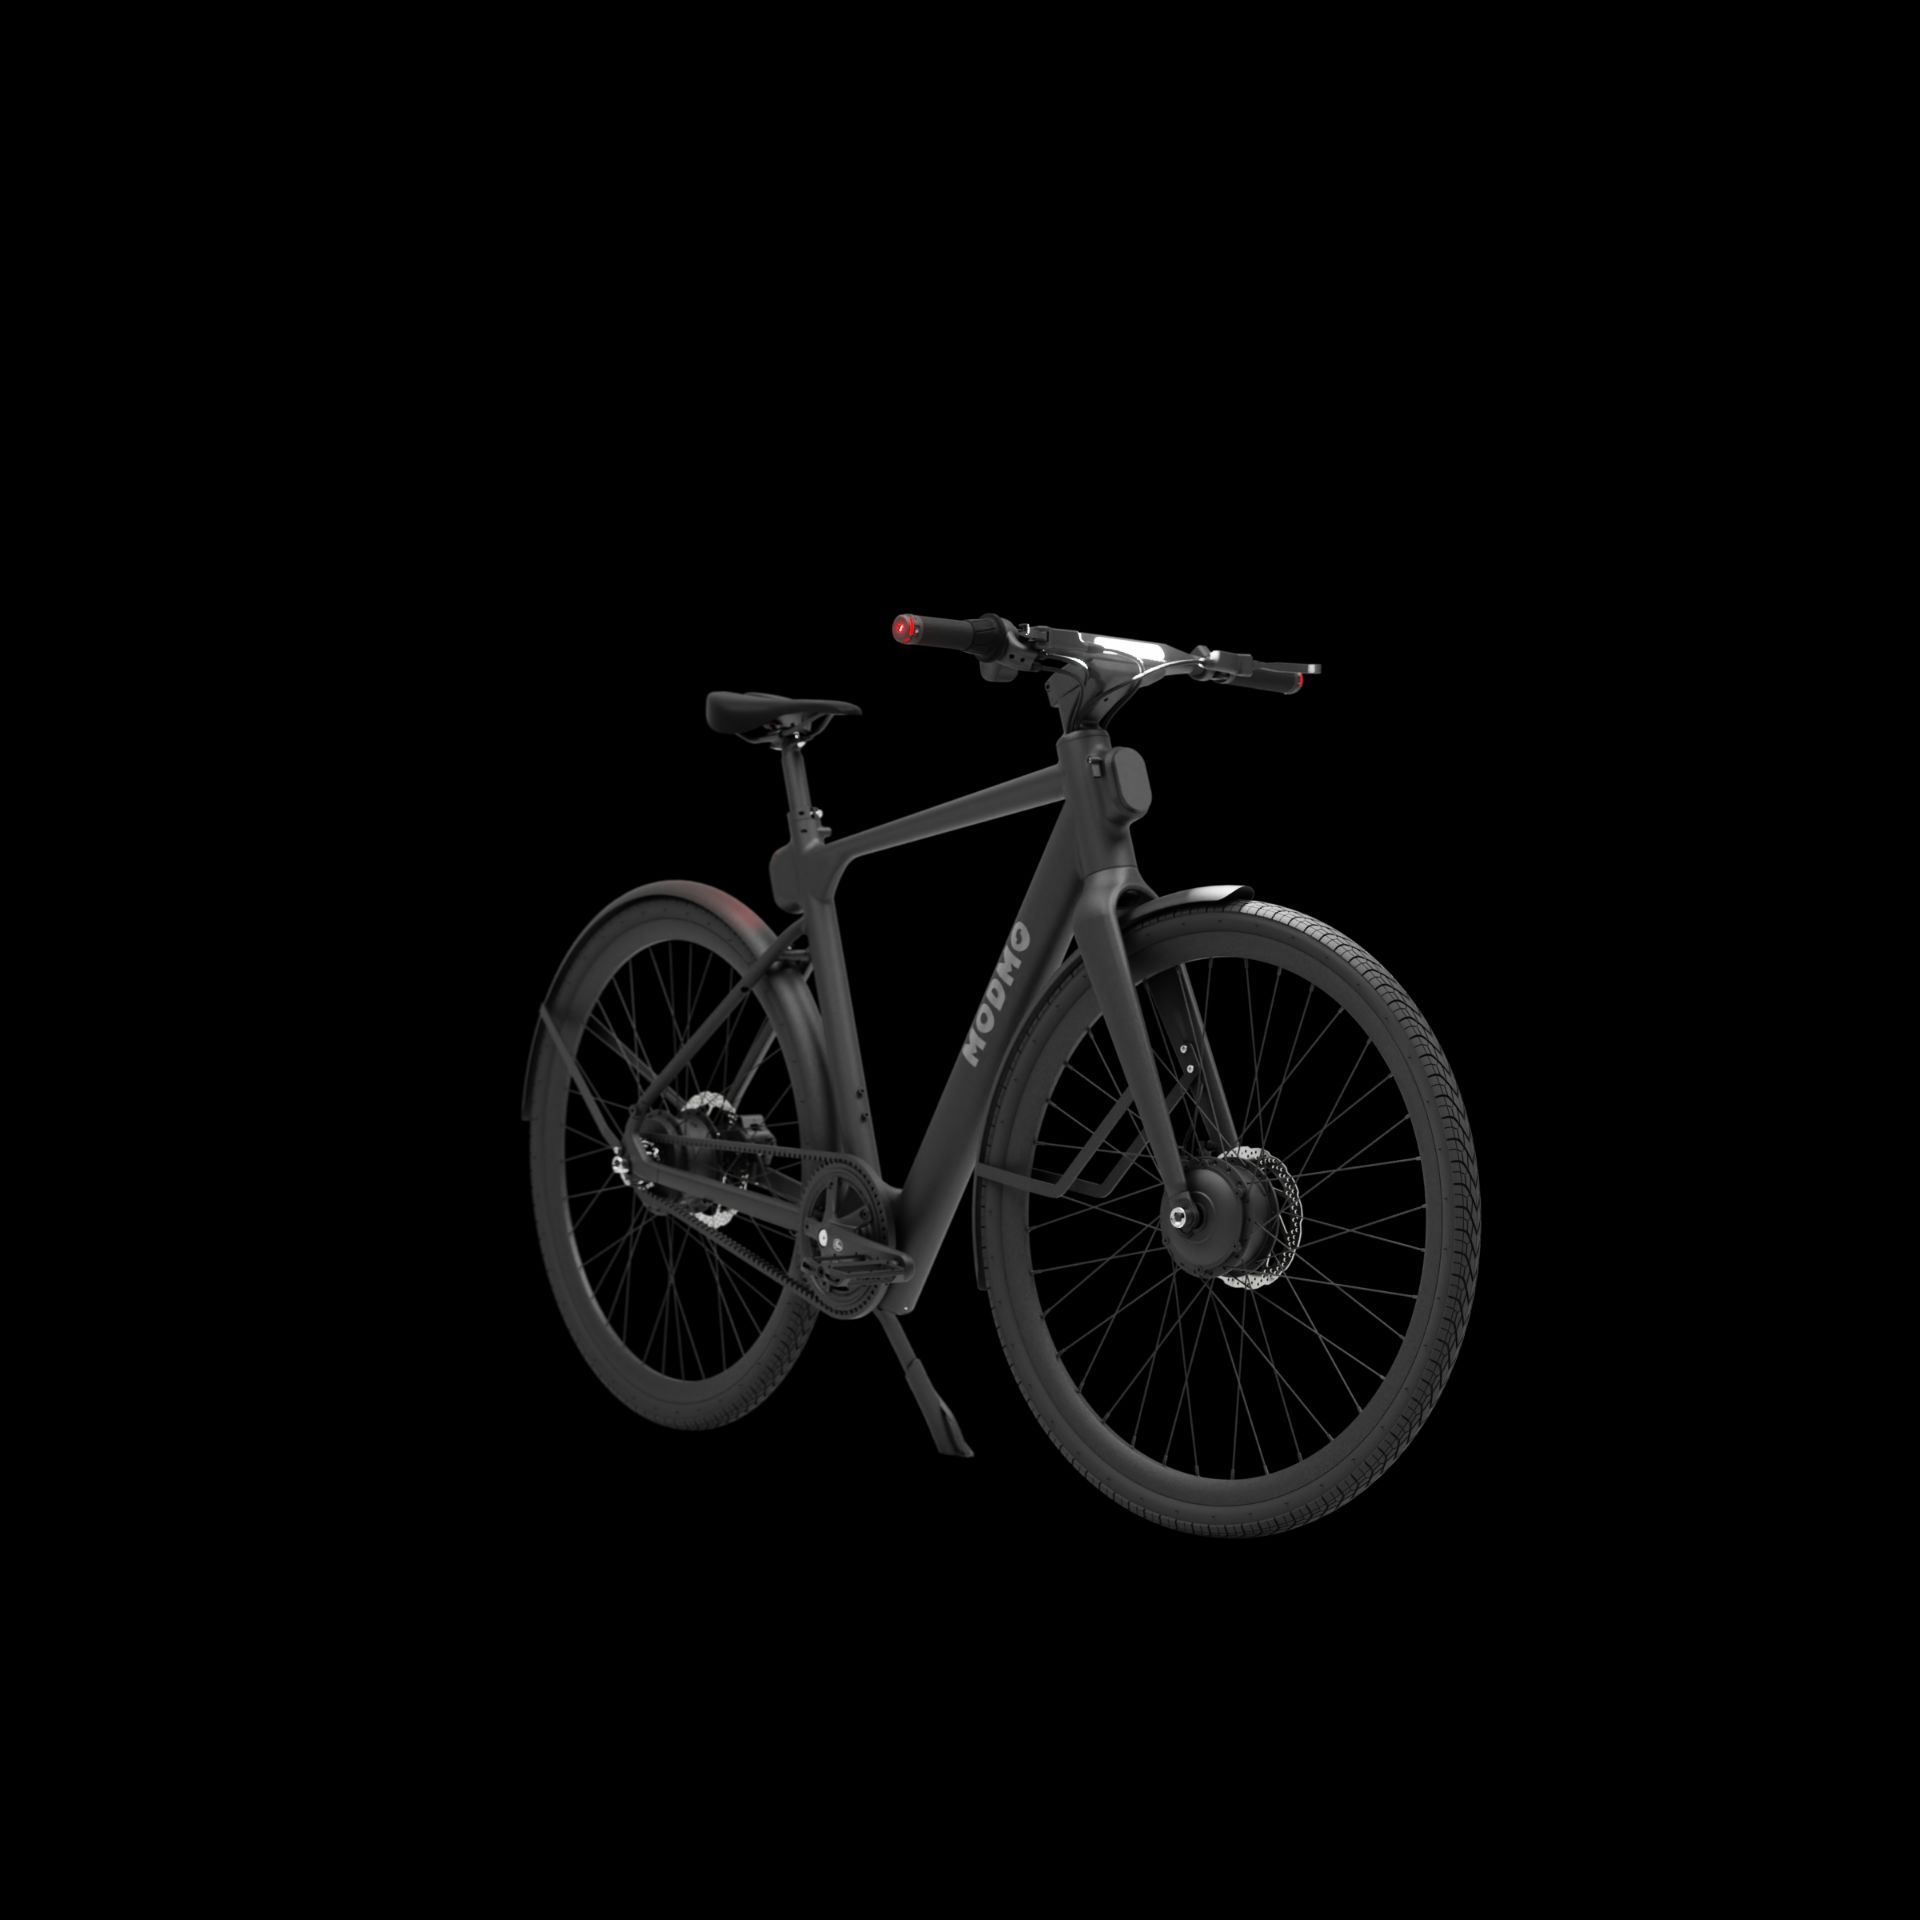 Modmo Saigon+ Electric Bicycle - RRP £2800 - Size M (Rider: 155-175cm) - Image 7 of 19